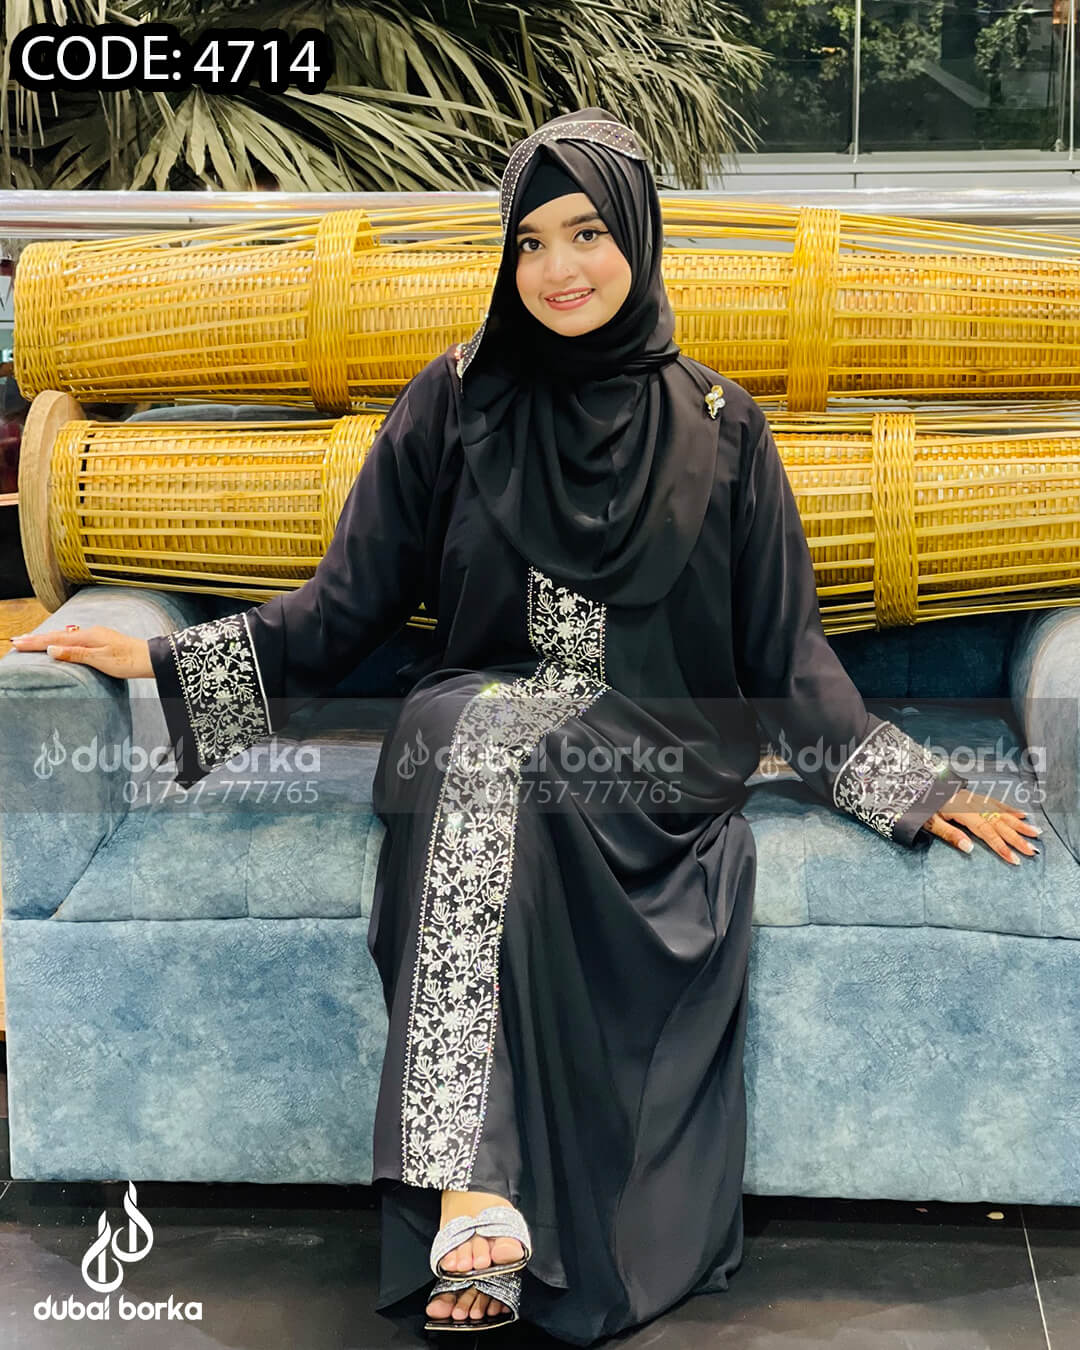 Nadiya Embroidery Borka Black-White With Hijab